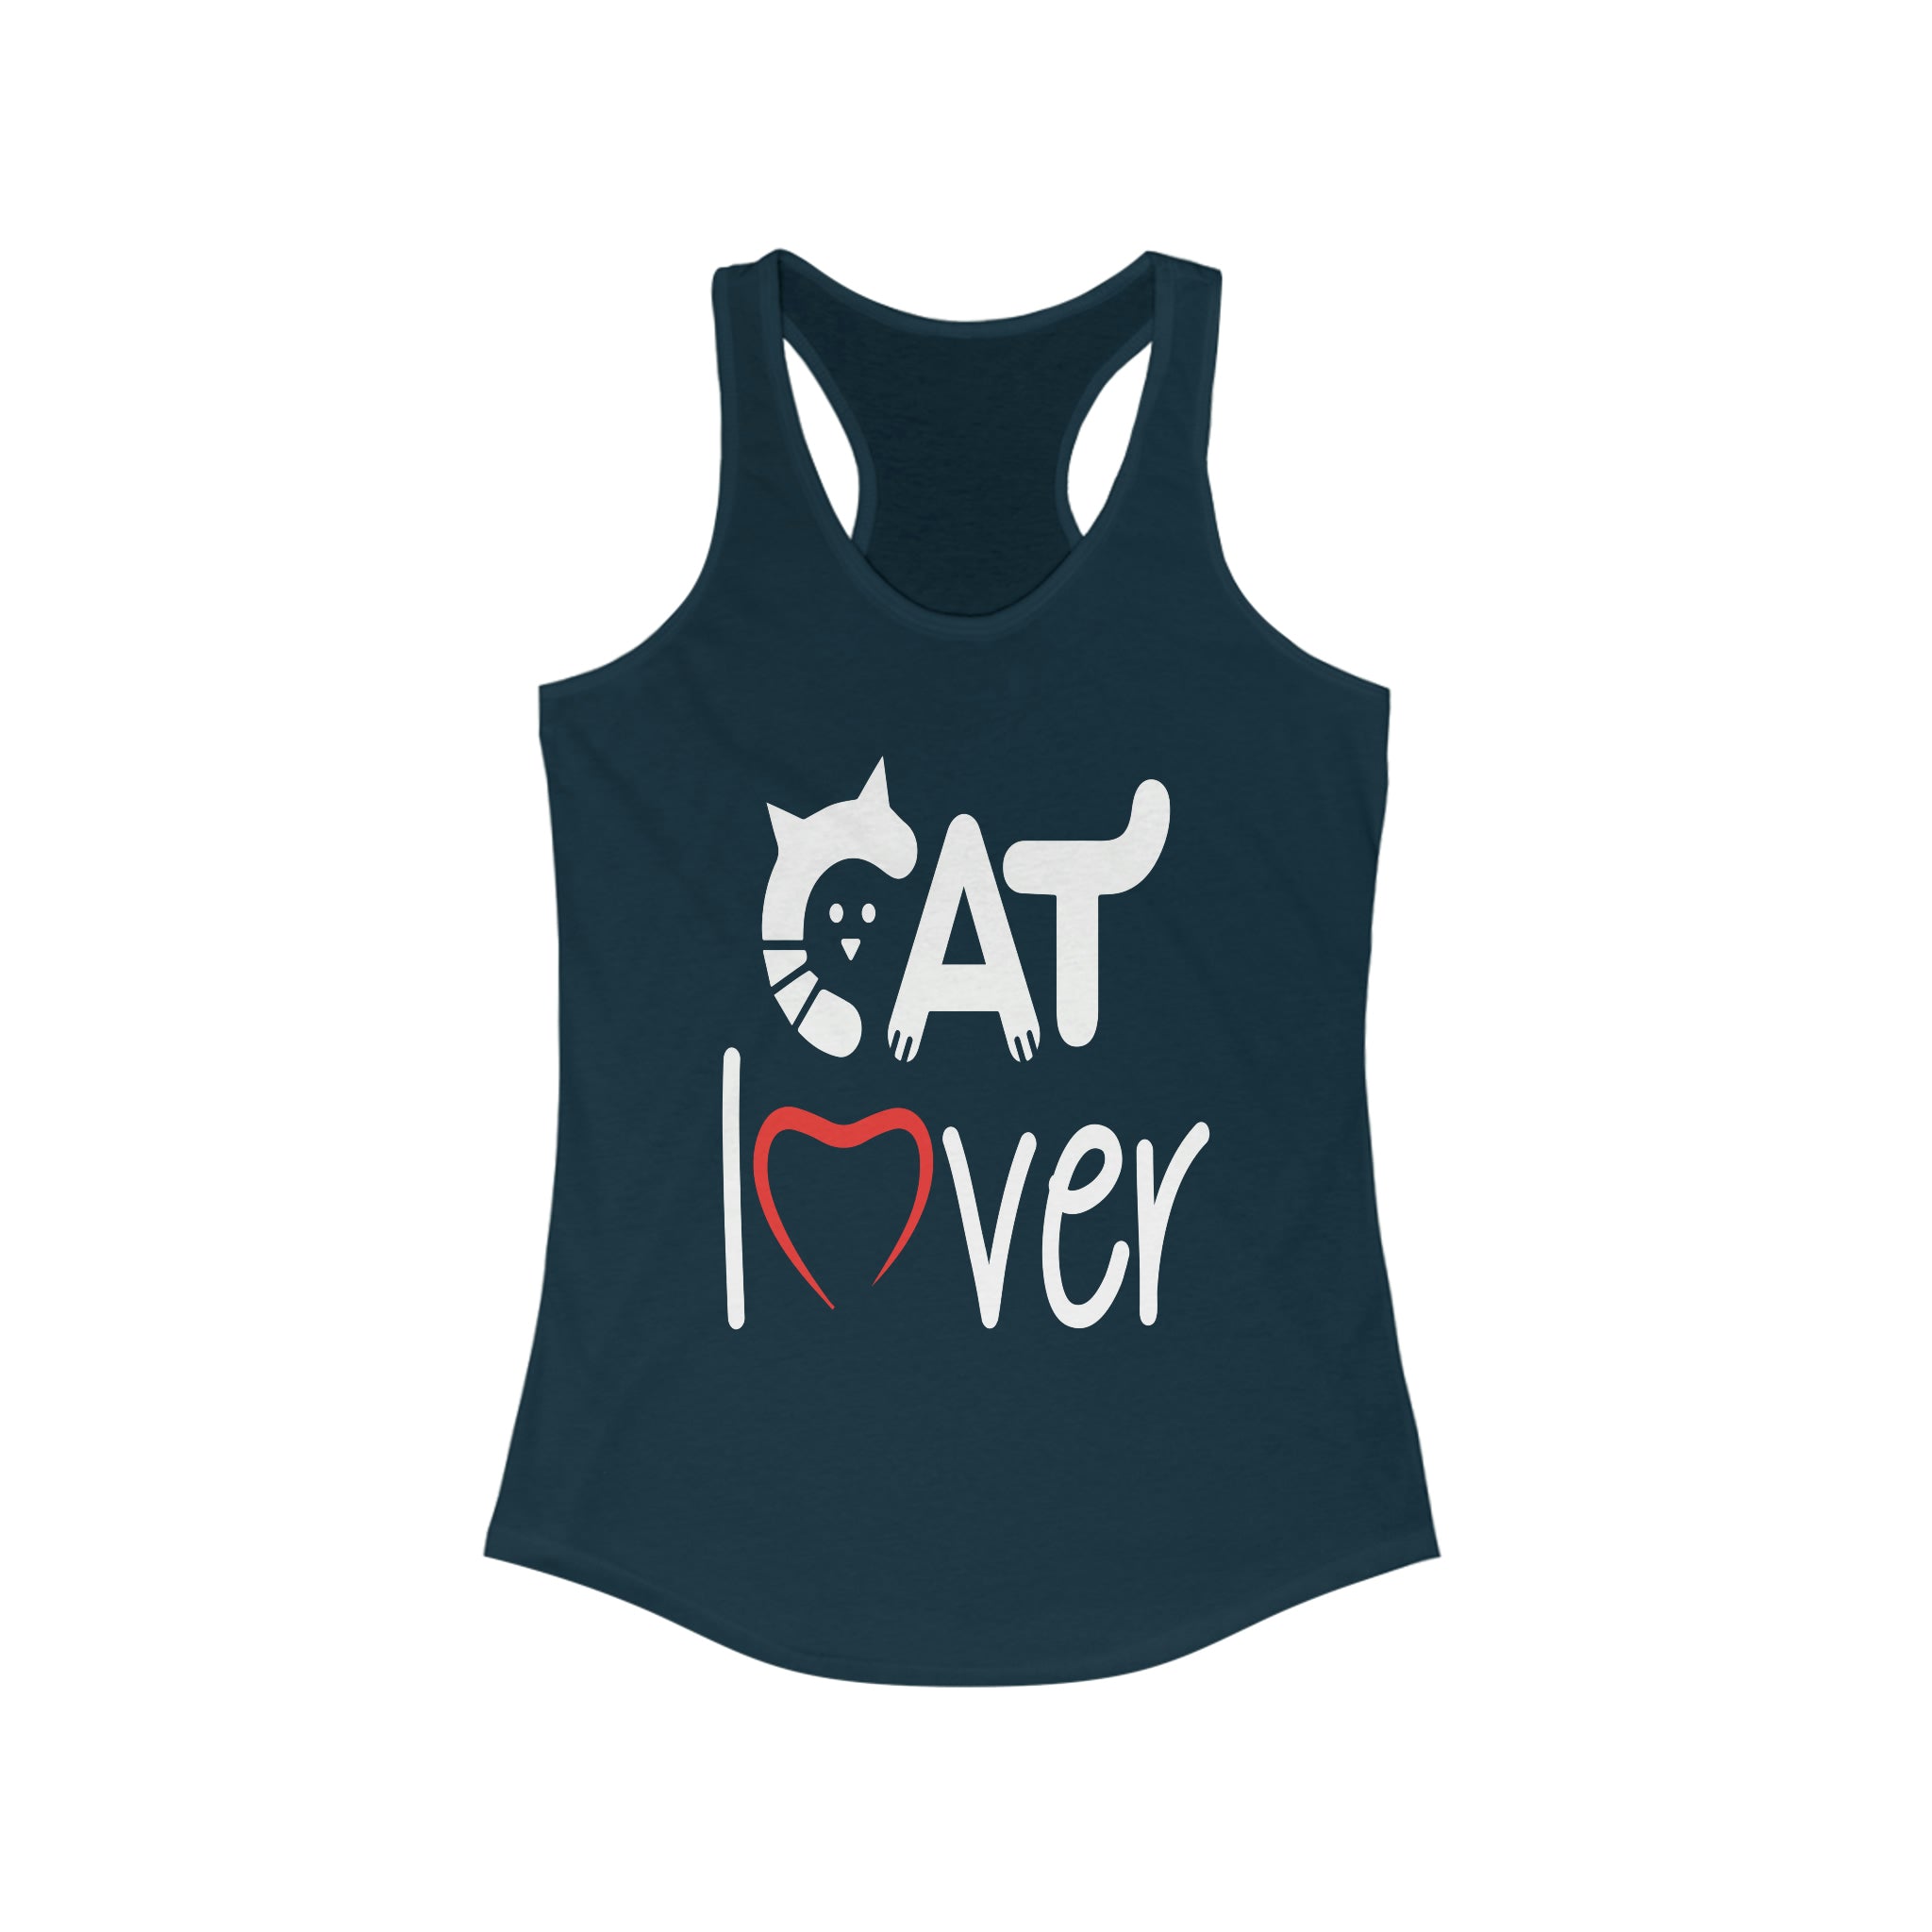 Cat Lover - Racerback Tank Top